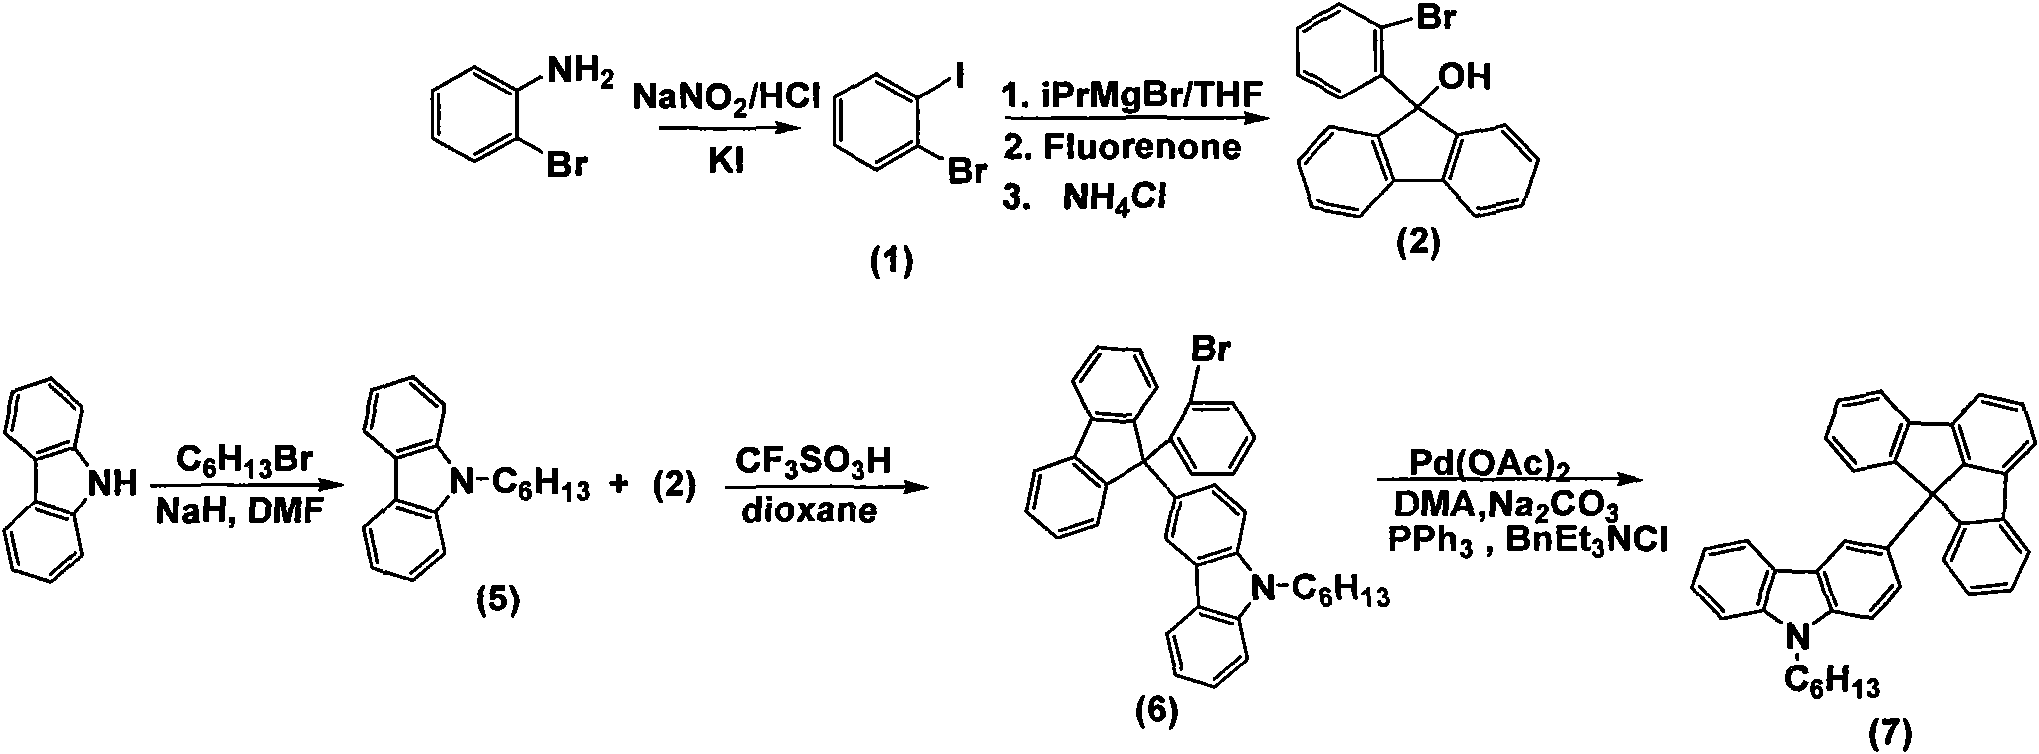 Fluoradene derivative and preparation method thereof